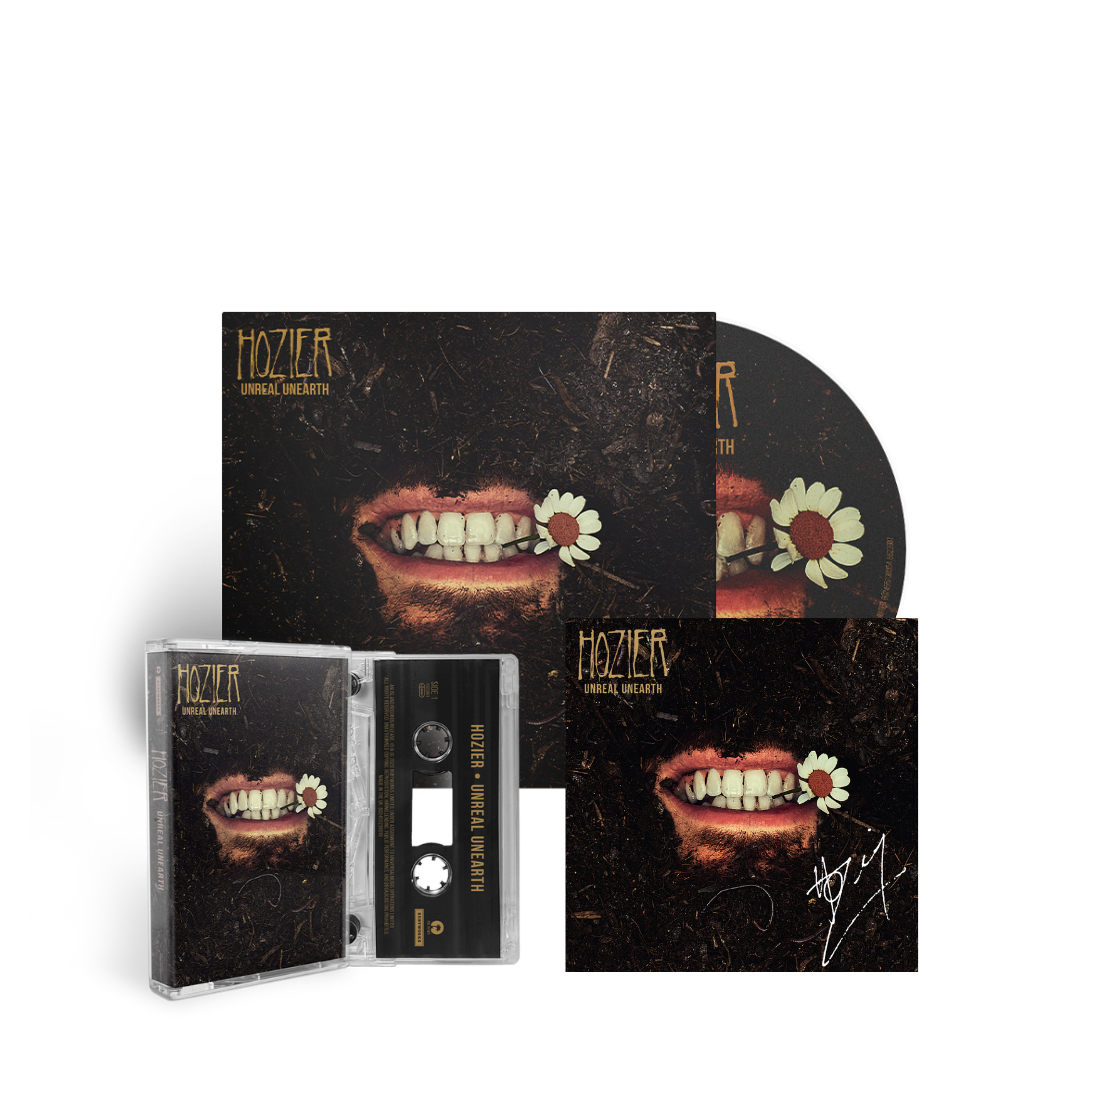 Unreal Unearth: CD, Cassette & Signed Art Card Bundle